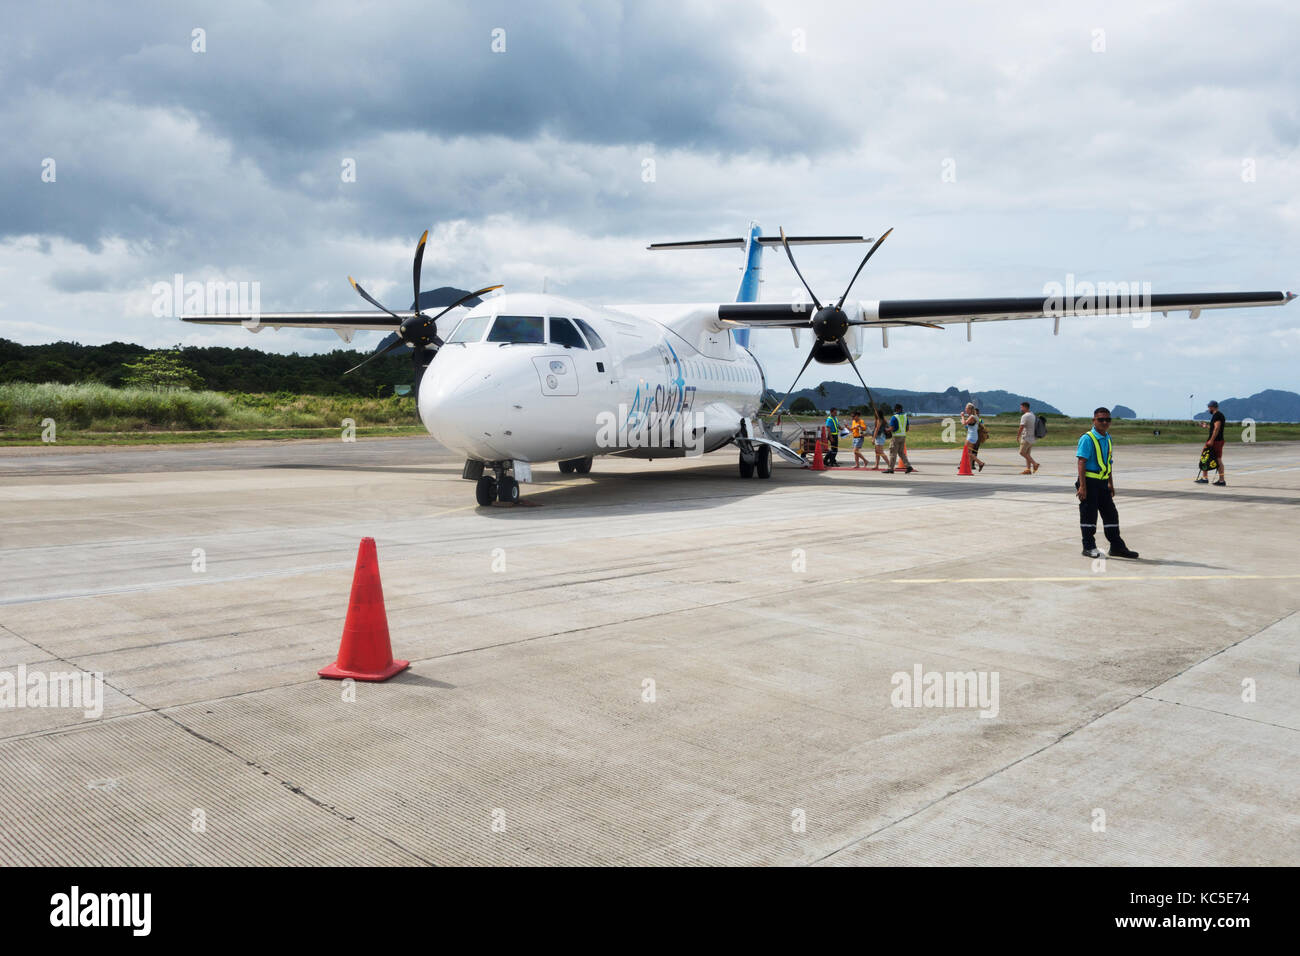 A SwiftAir plane on the ground at Cebu city airport, Cebu, Philippines Asia Stock Photo